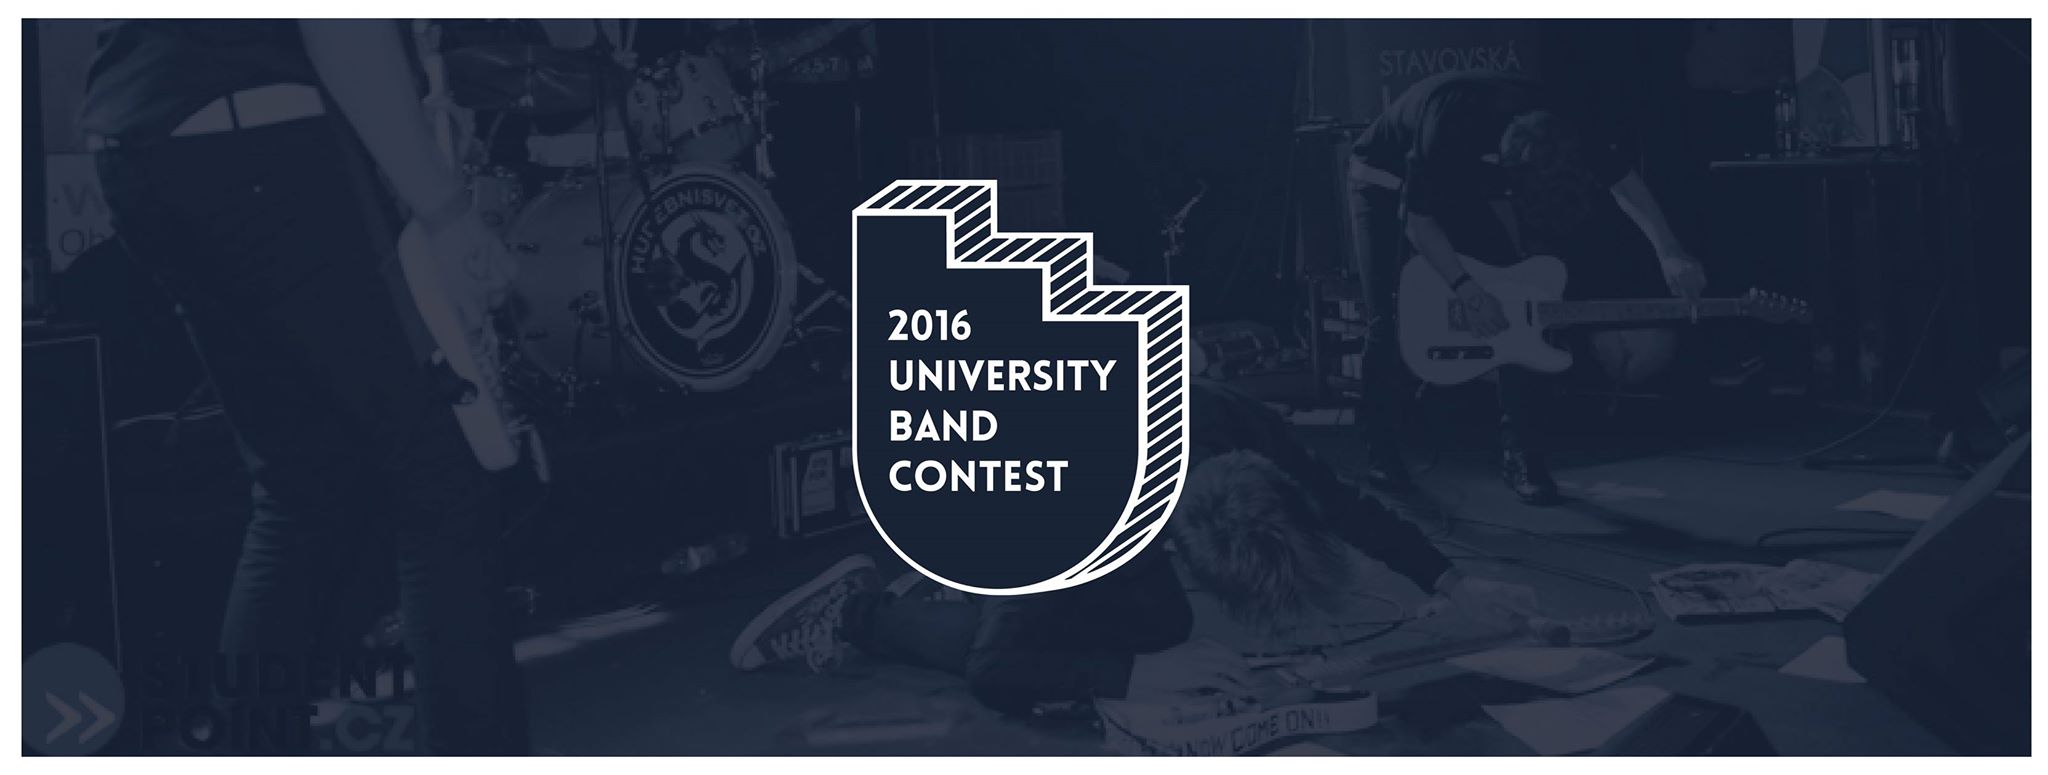 University Band Contest